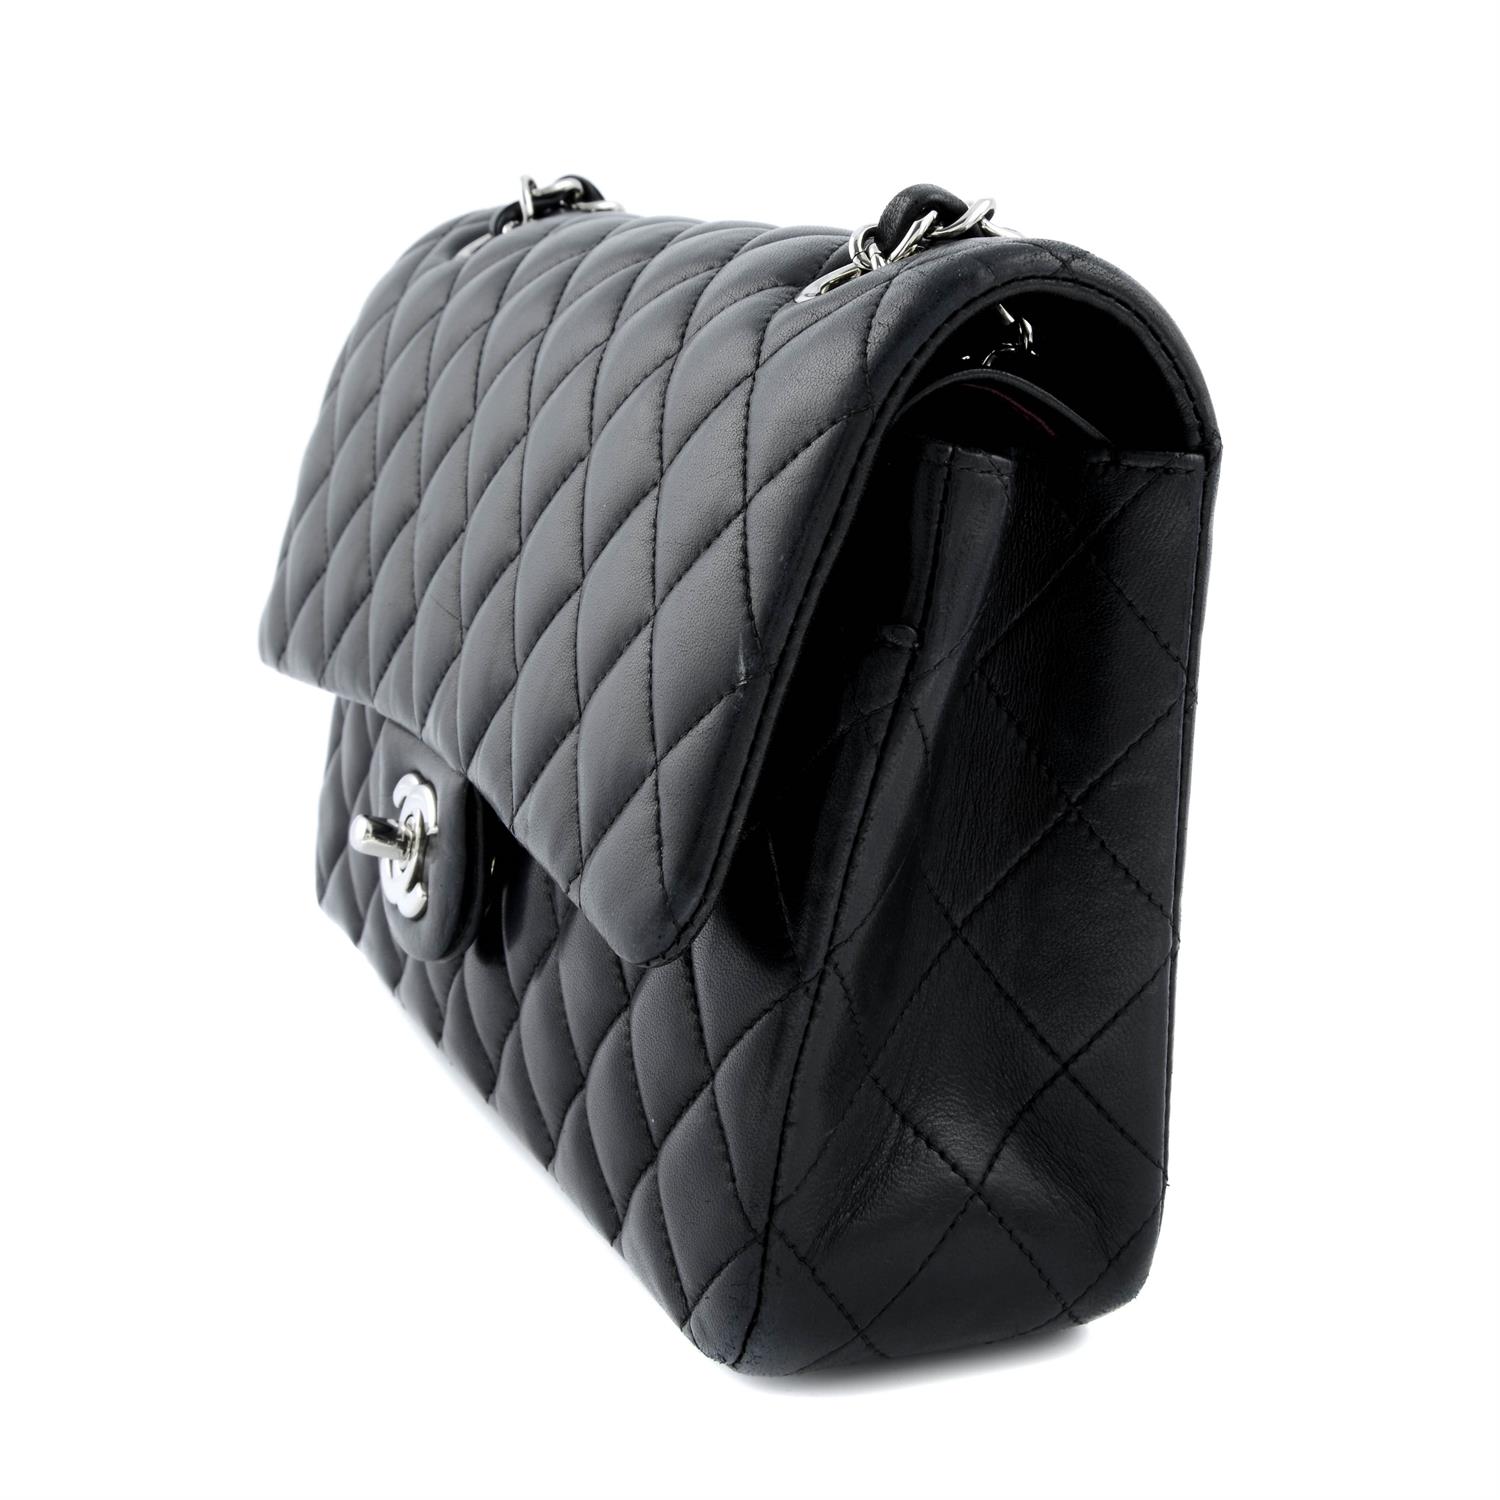 CHANEL - a black Classic Double Flap lamb skin leather handbag. - Image 2 of 4